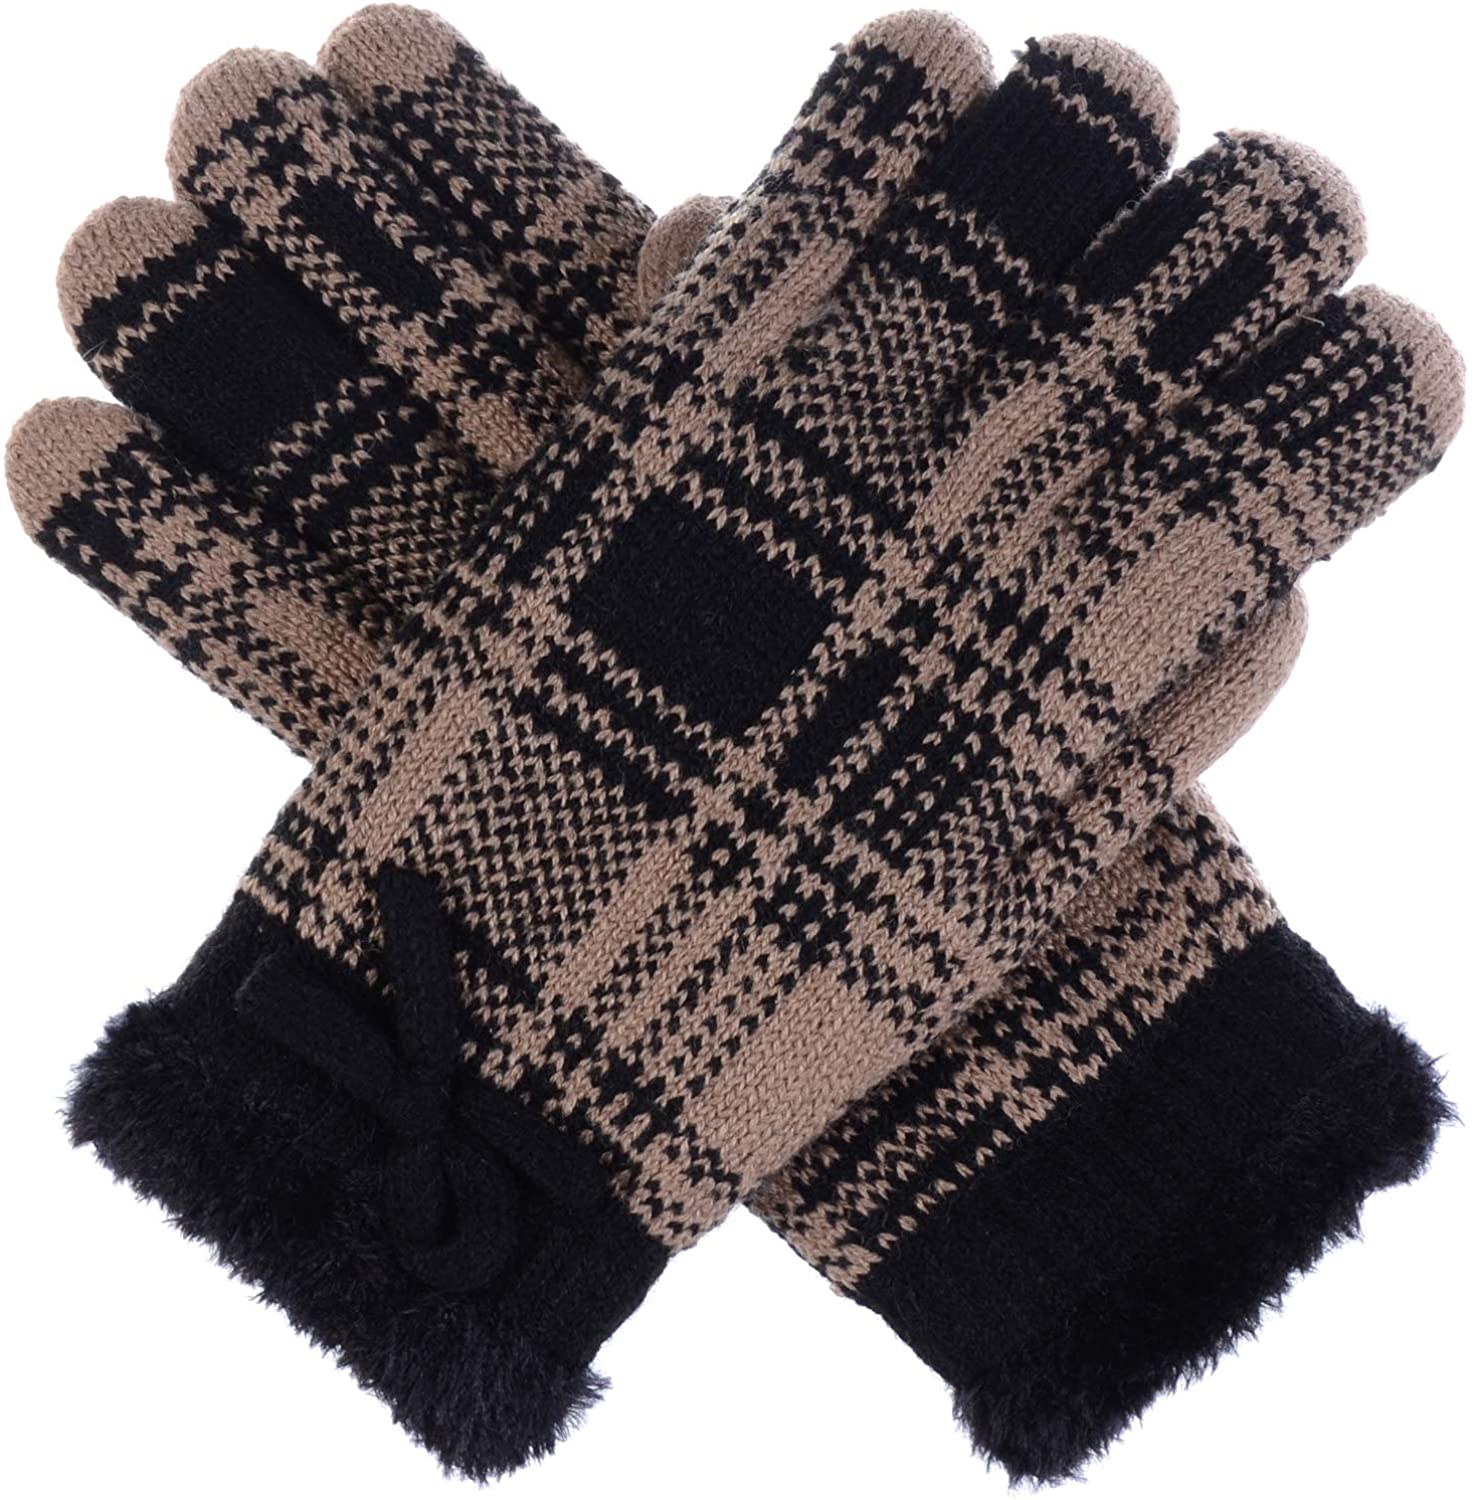 Many Styles LL Womens Winter Knit Gloves Fashion Warm Fleece Lined 